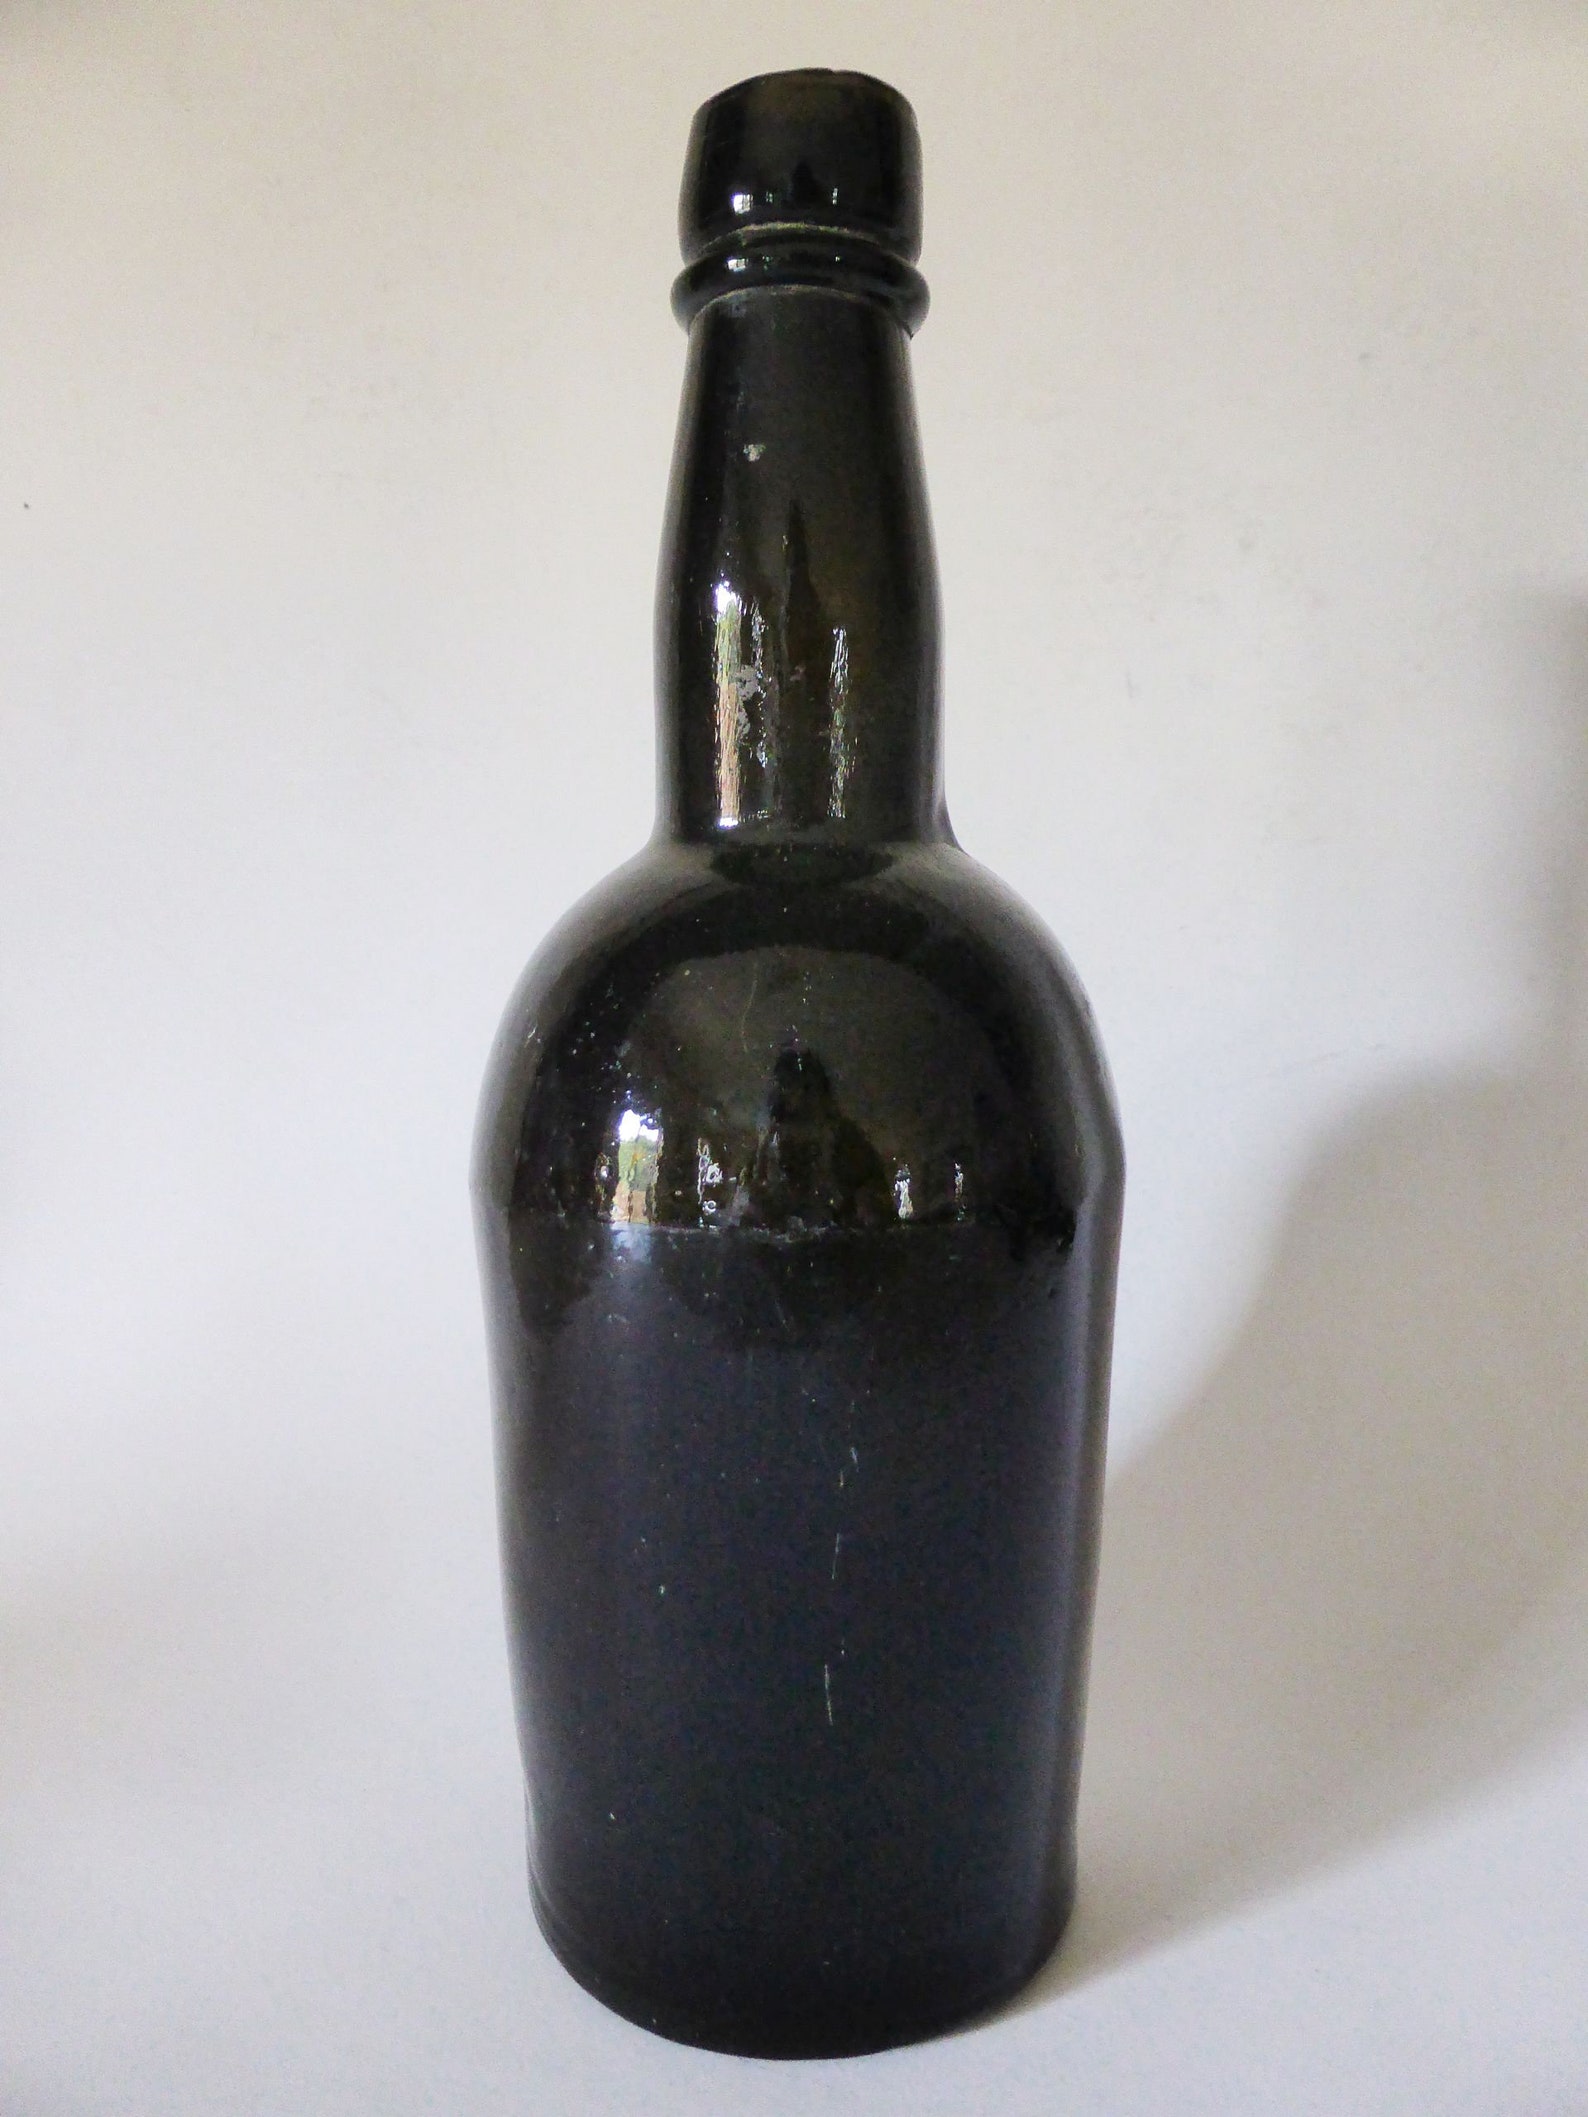 Antique Black Glass Ale Bottle 1800s Heavy Glass Beer Bottle | Etsy